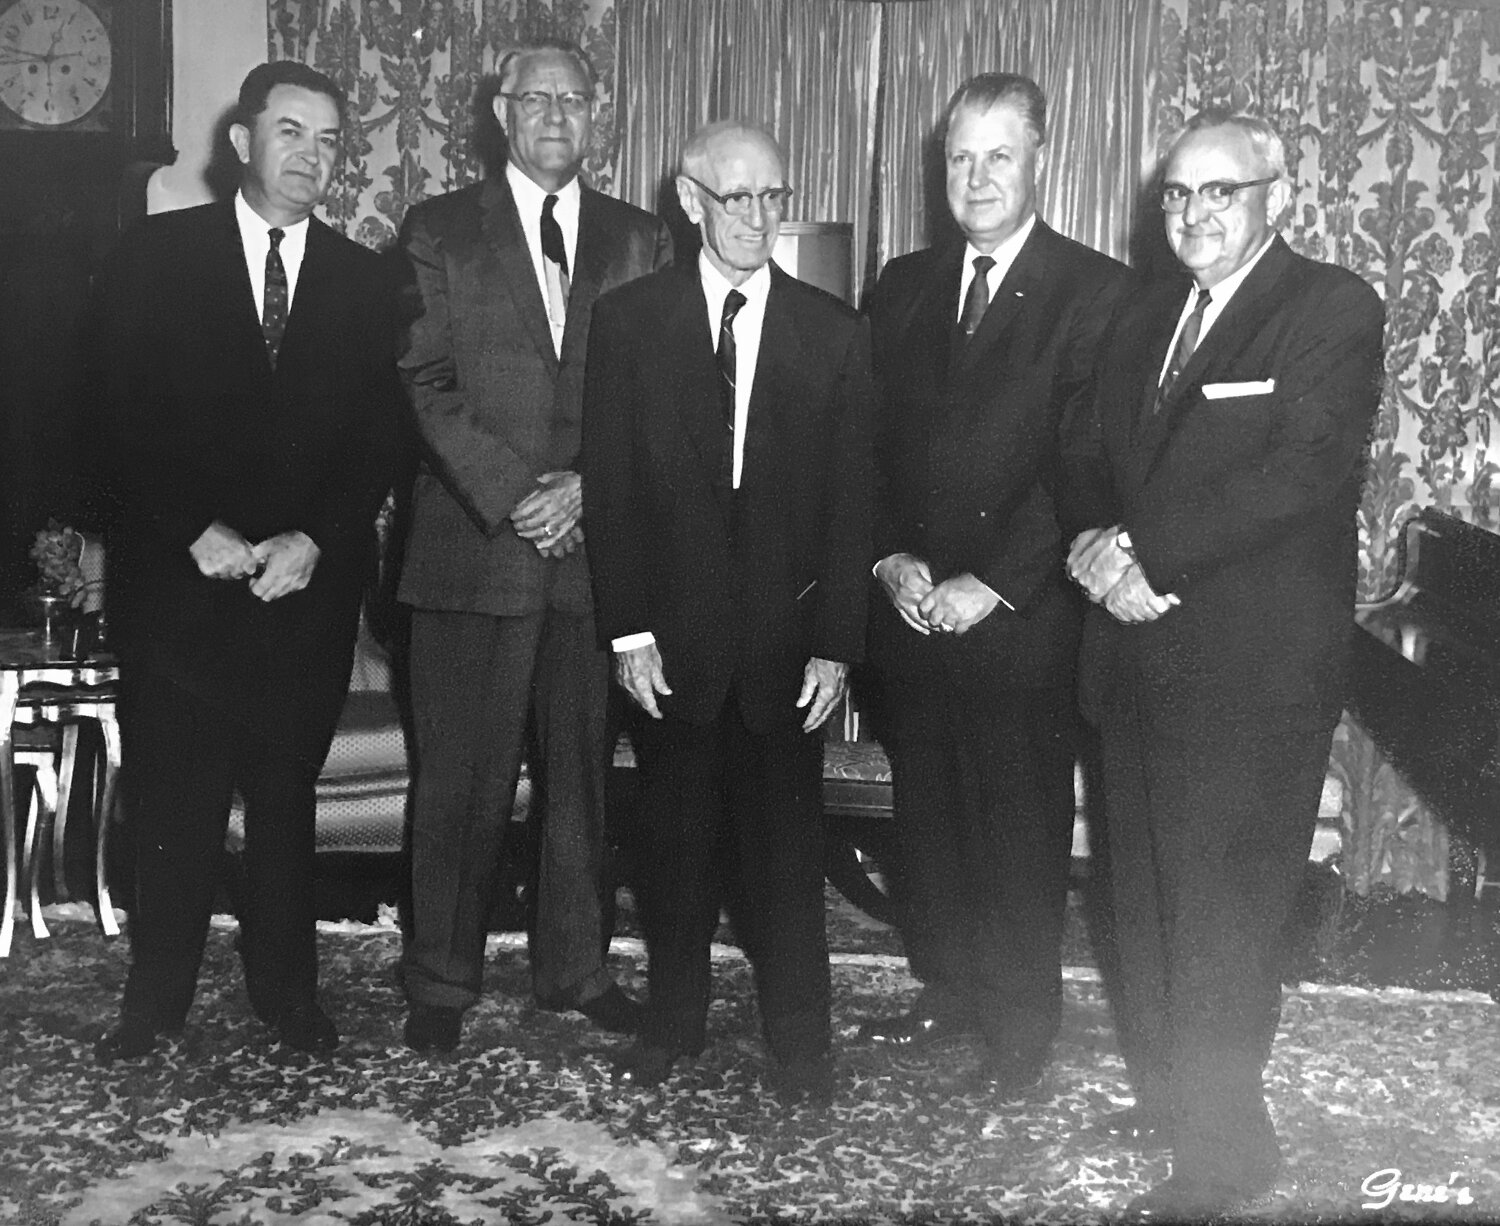 The original board of the Meredith Foundation in 1958 included, from left, Joe Sharp, secretary-treasurer; J.C. Judge, vice chairman; Harry Meredith, chairman; Ross Lukenbill; and Leonard Bruner.